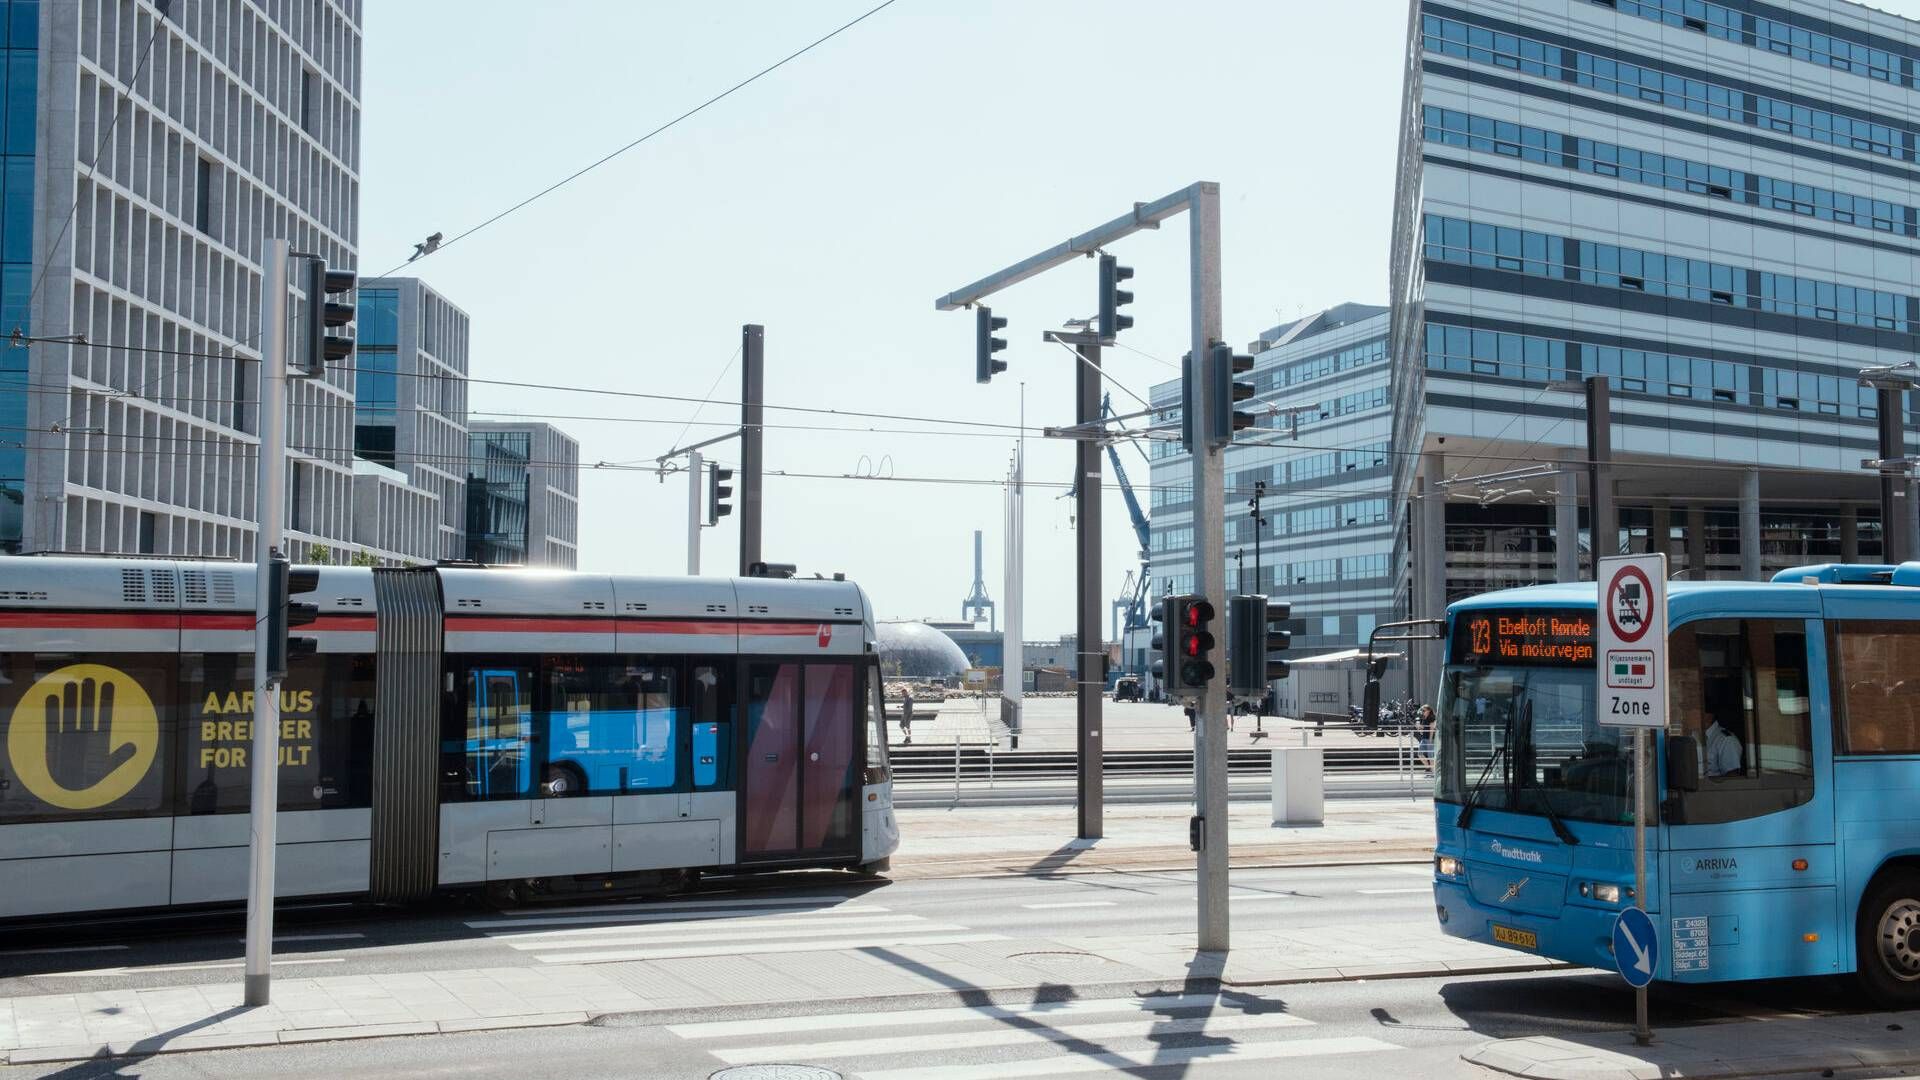 Et anlægsoverslag for BRT-linje i Aarhus lyder på over 1 mia. kr. Kommunen har afsat knap 300 mio. kr. til projektet. | Foto: Lau-Nielsen Morten/Ritzau Scanpix